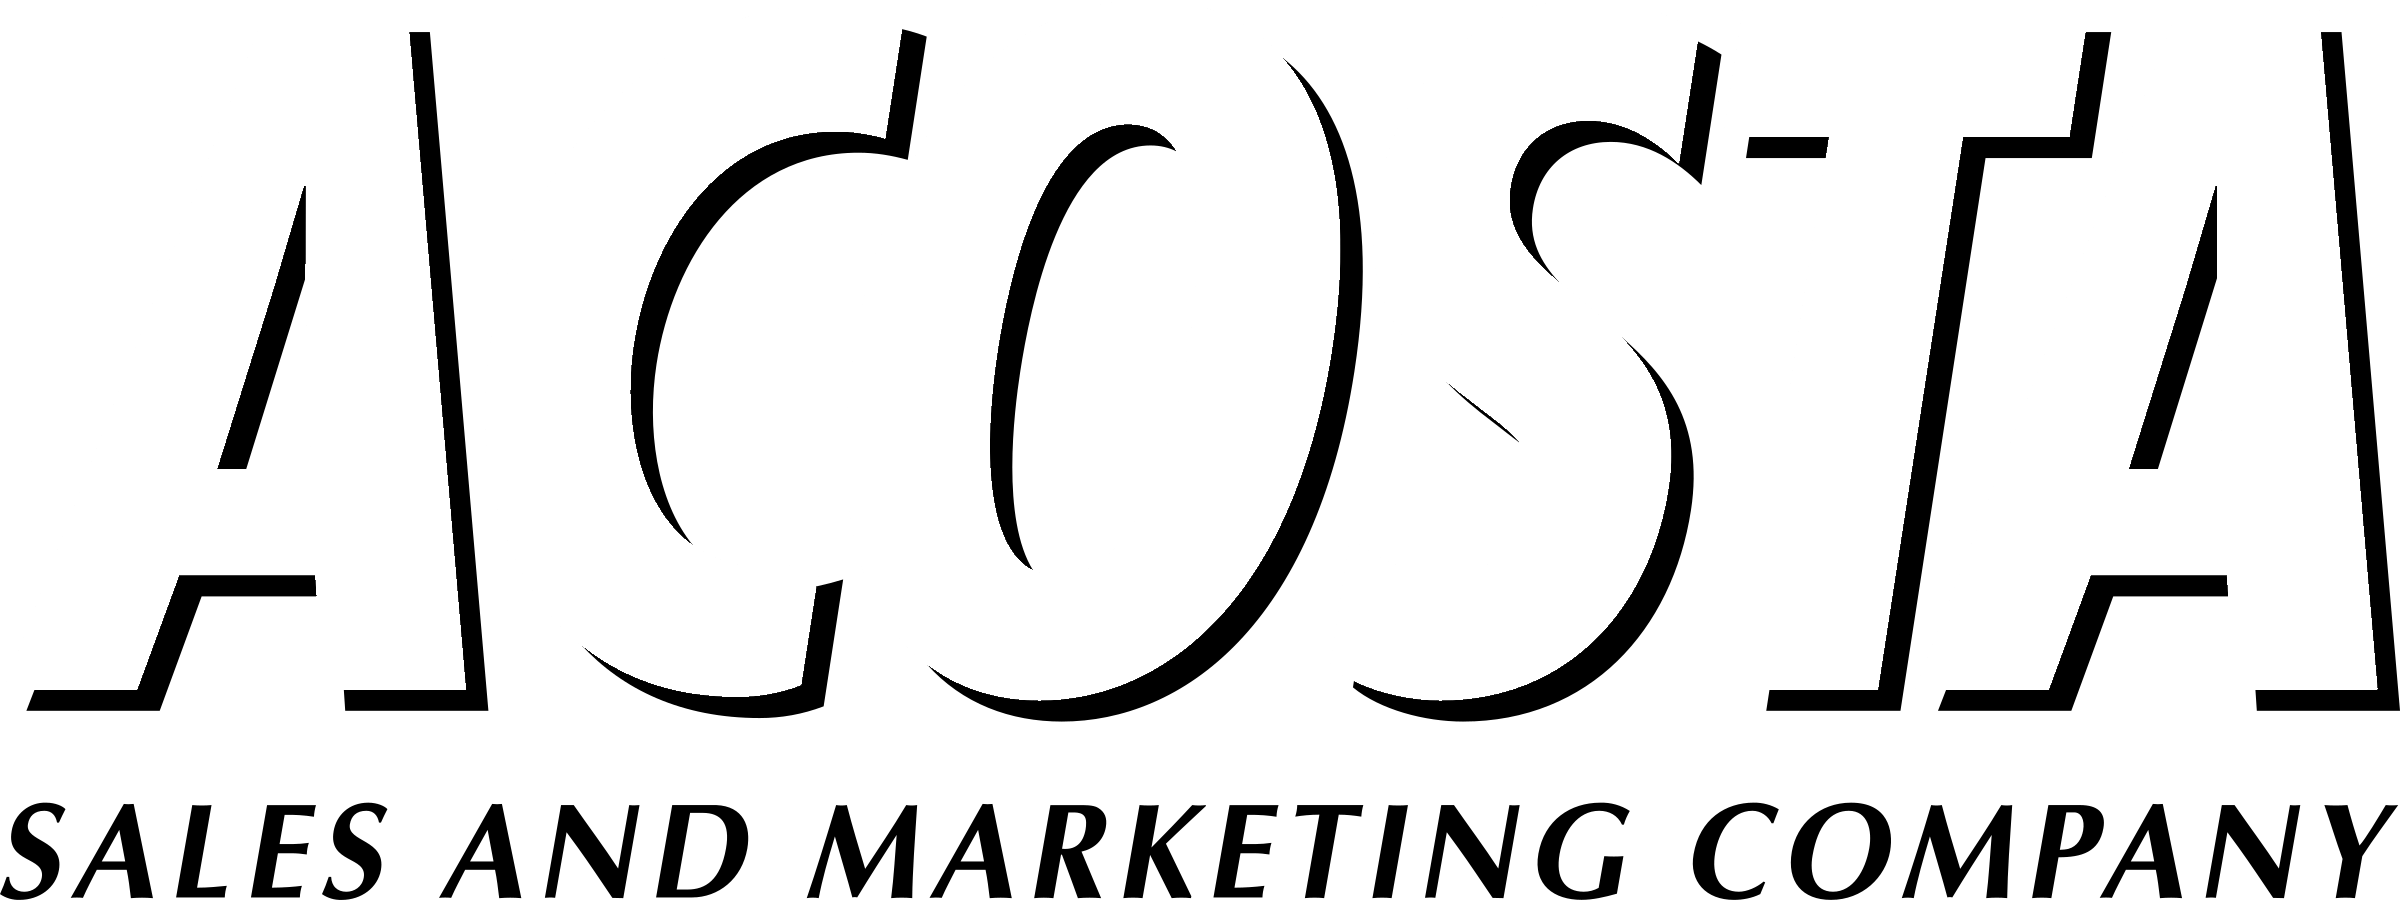 Acosta Logo - Acosta 1 Logo PNG Transparent & SVG Vector - Freebie Supply